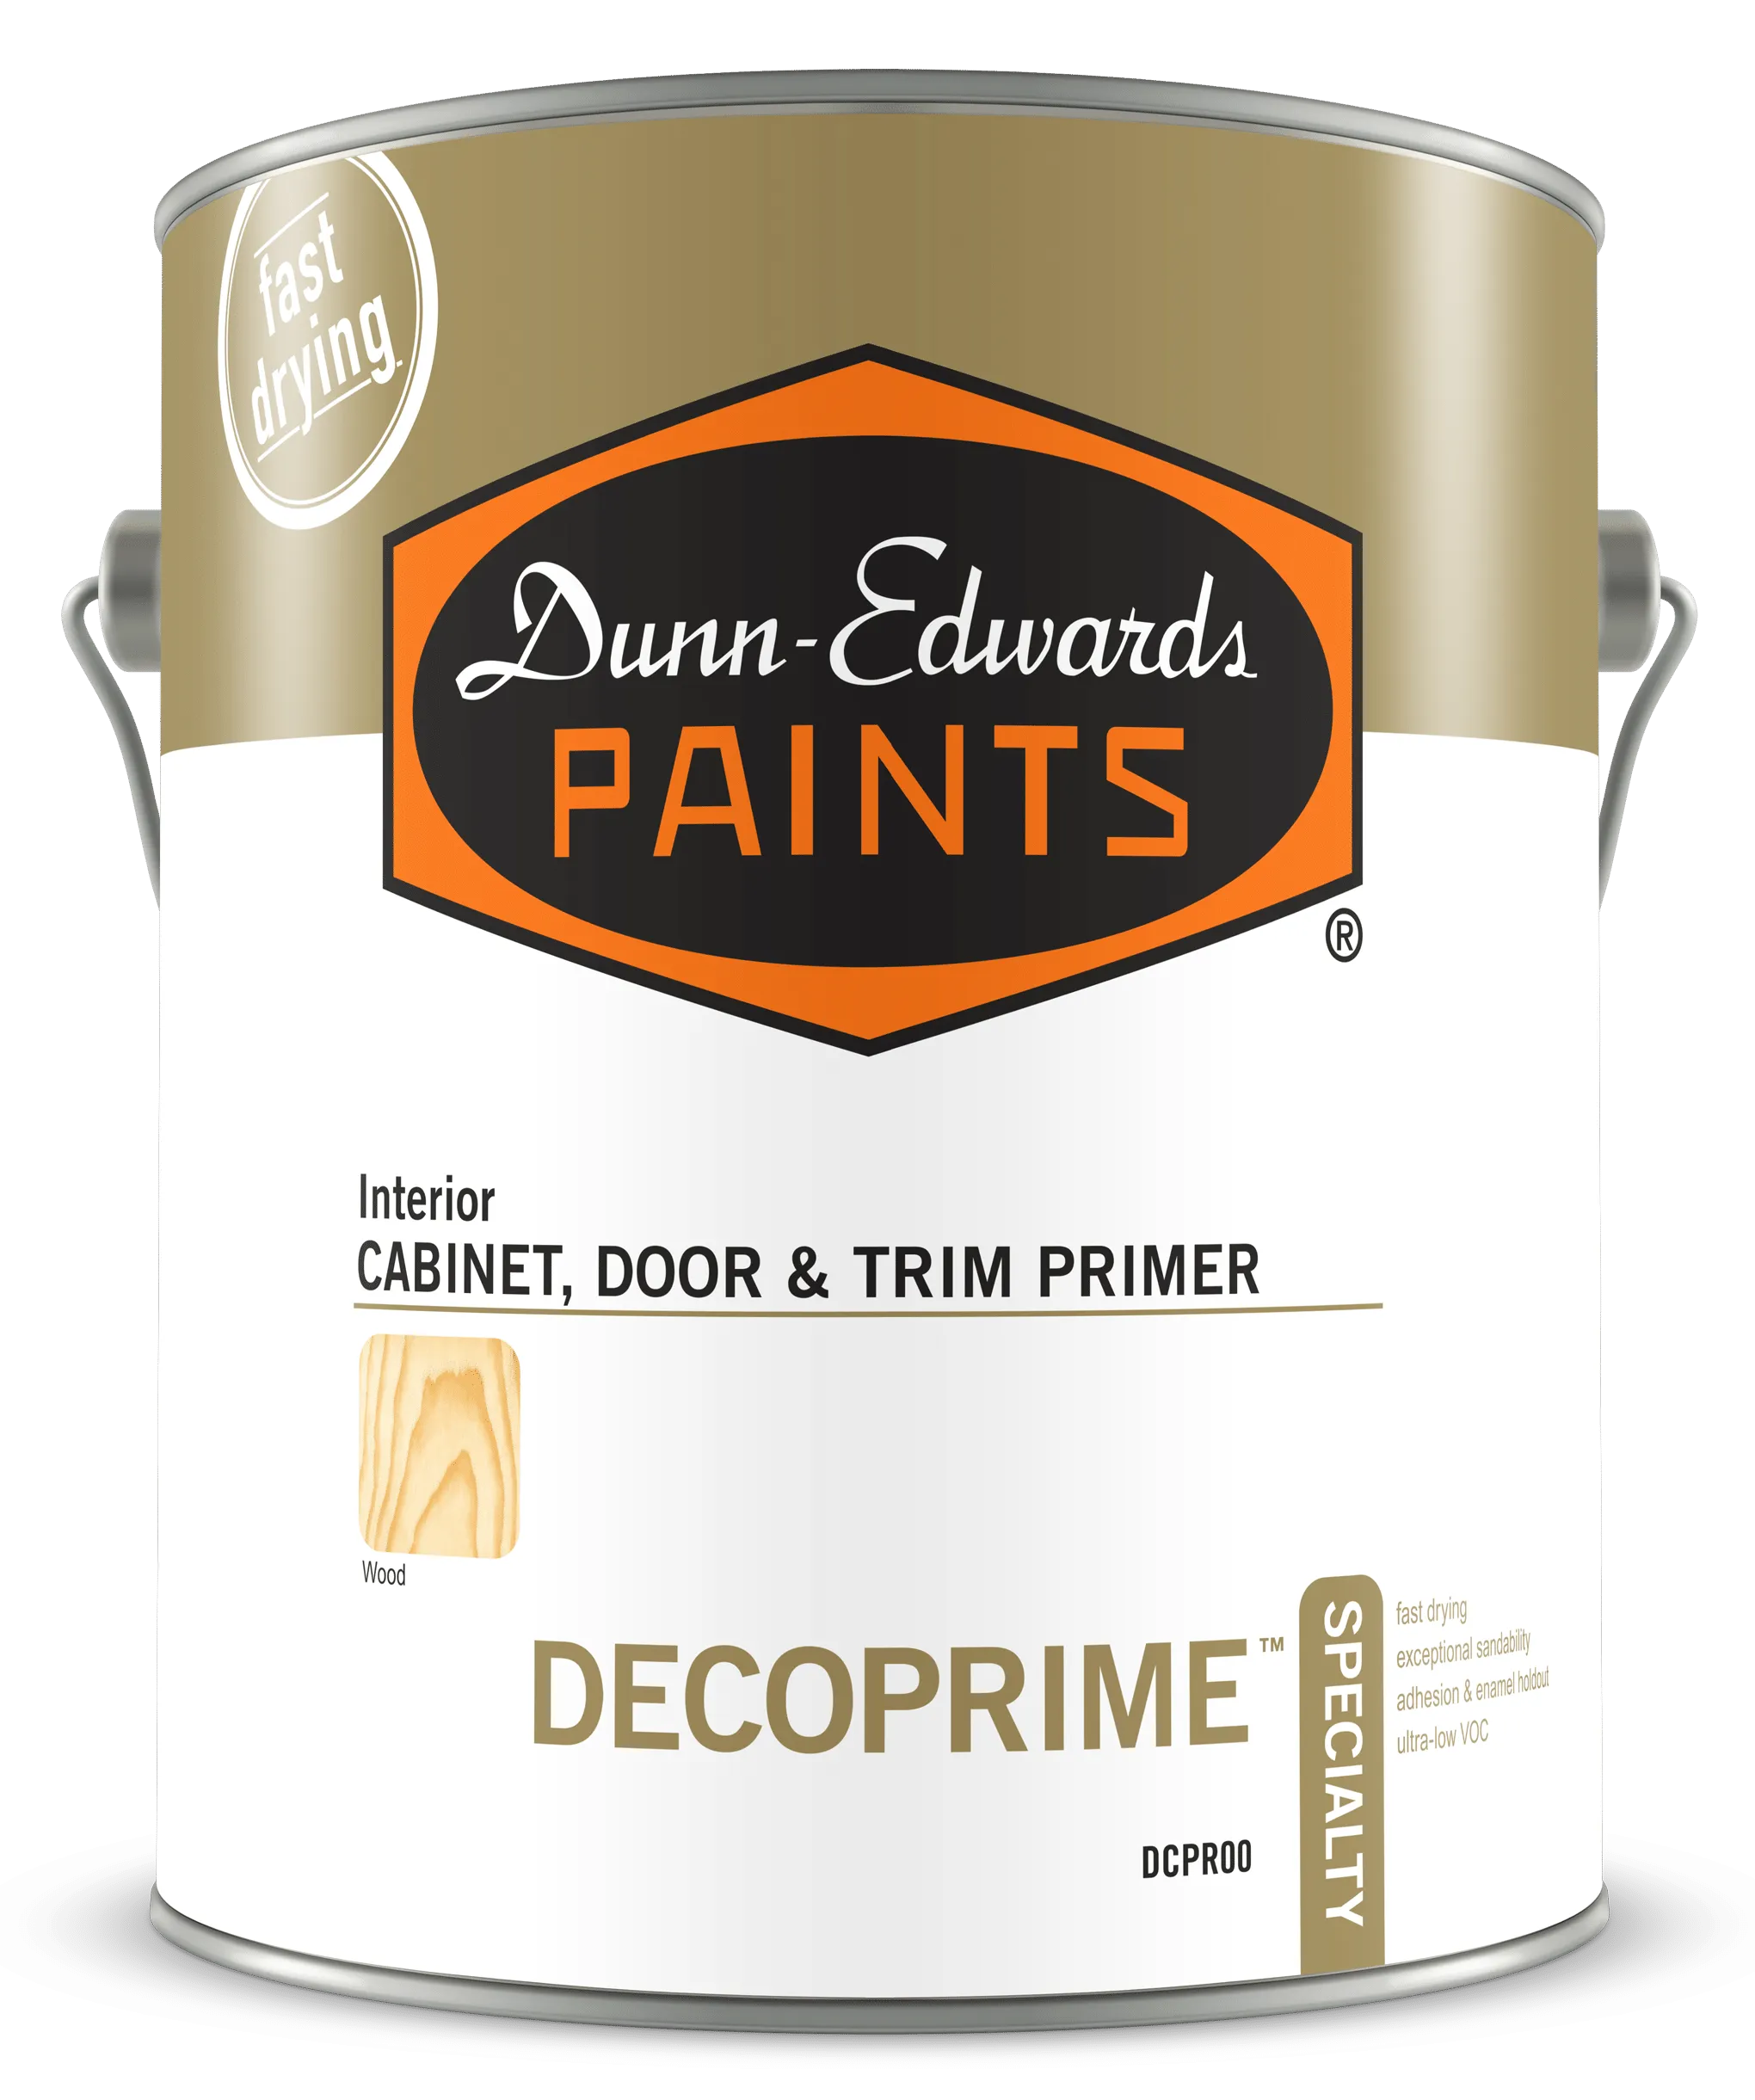 DECOPRIME™ Interior Cabinet, Door And Trim Primer Can